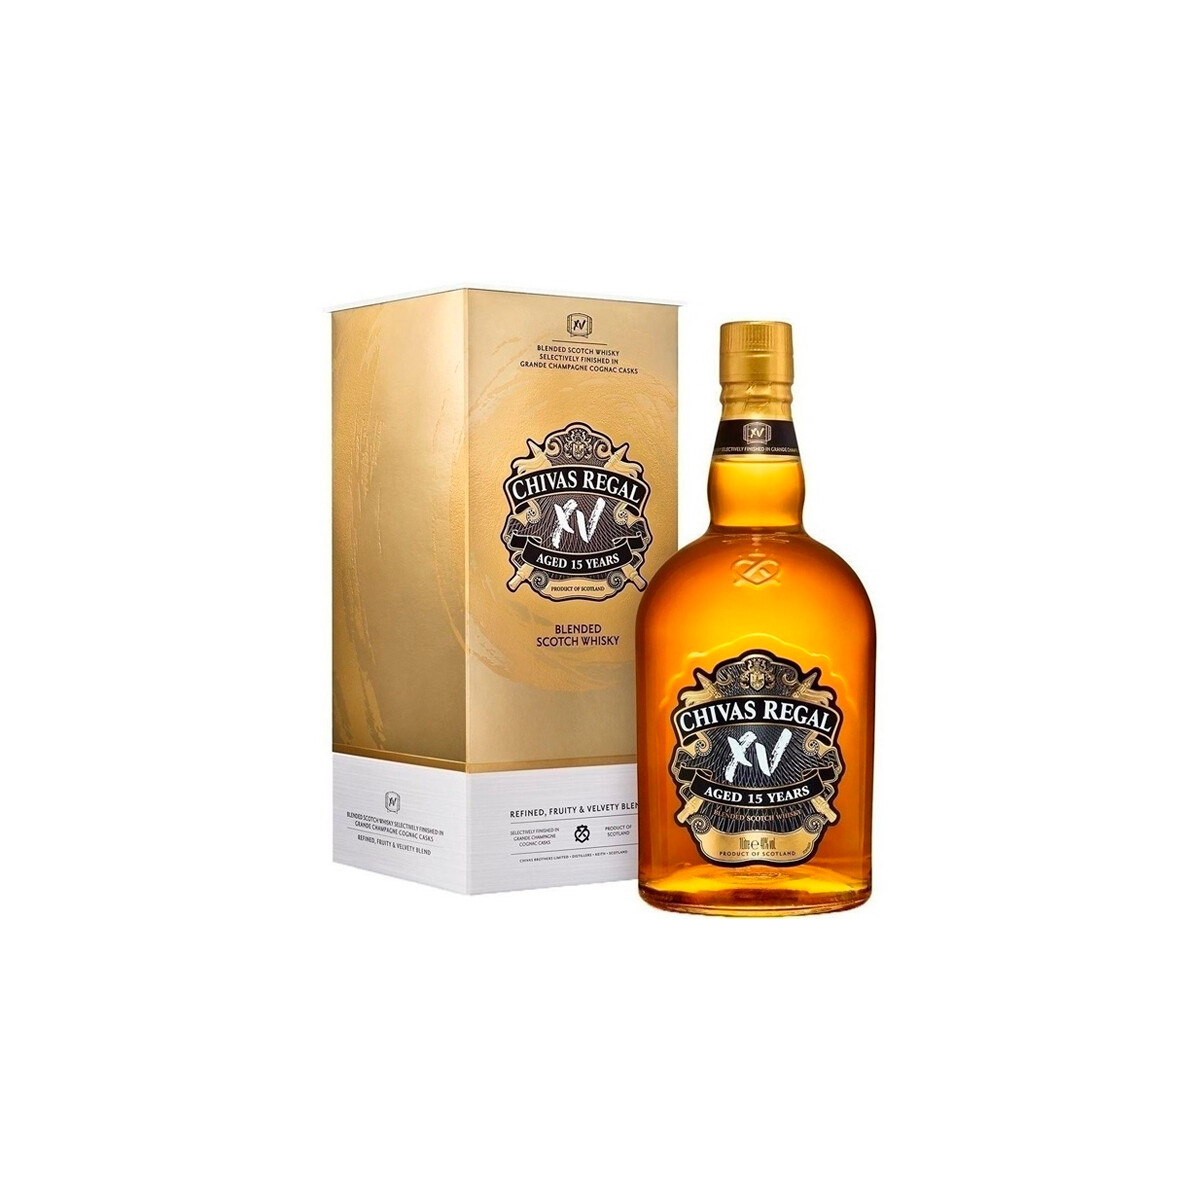 Whisky Escocés Chivas Regal Xv - 750 ml 